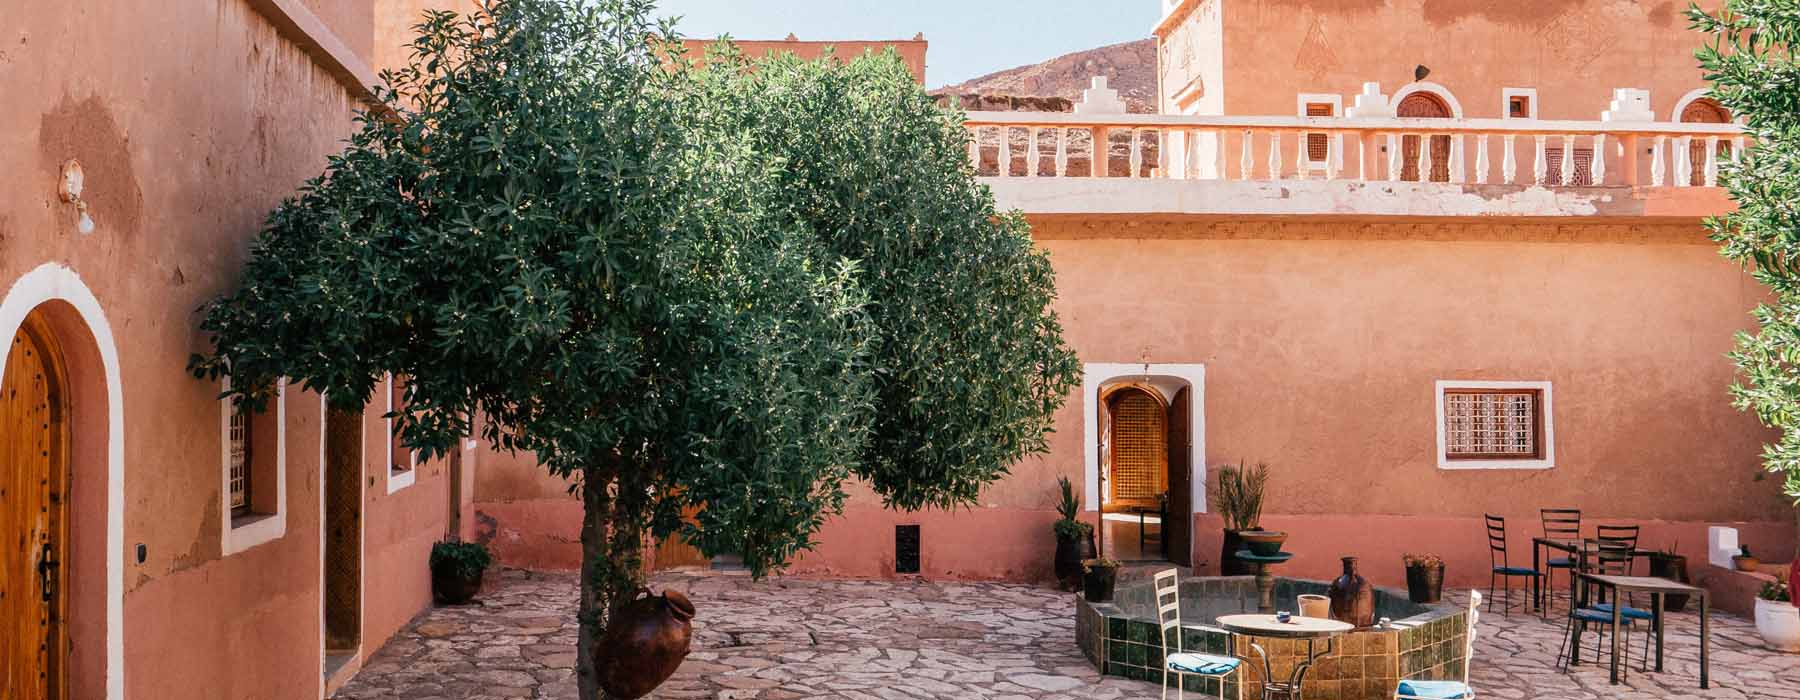 Morocco<br class="hidden-md hidden-lg" /> Luxury Holidays